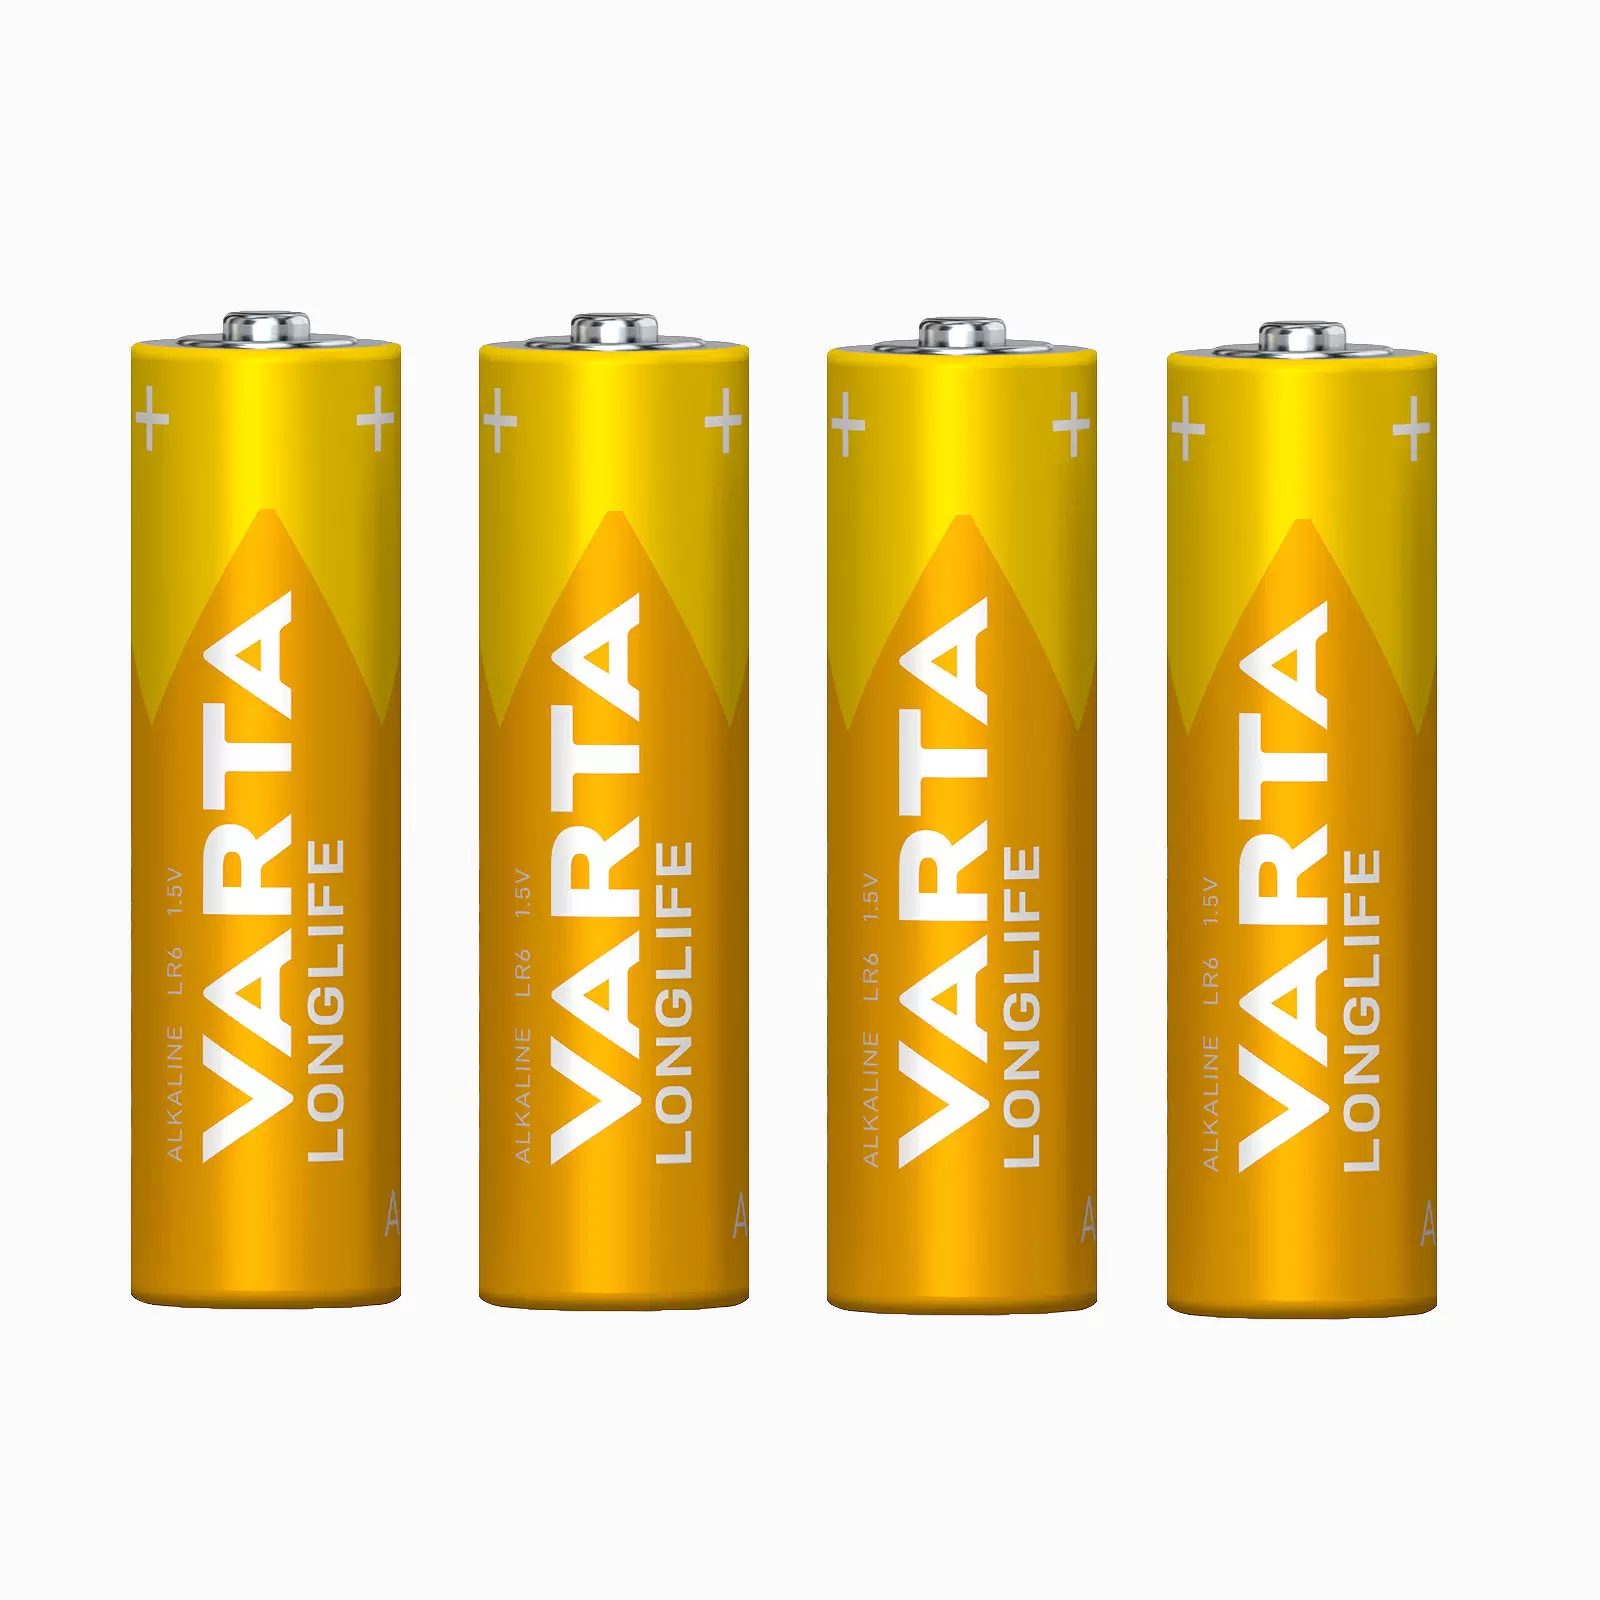 Varta Batterien AA LR06 Alkaline Mignon Longlife 1,5V 4er Blister